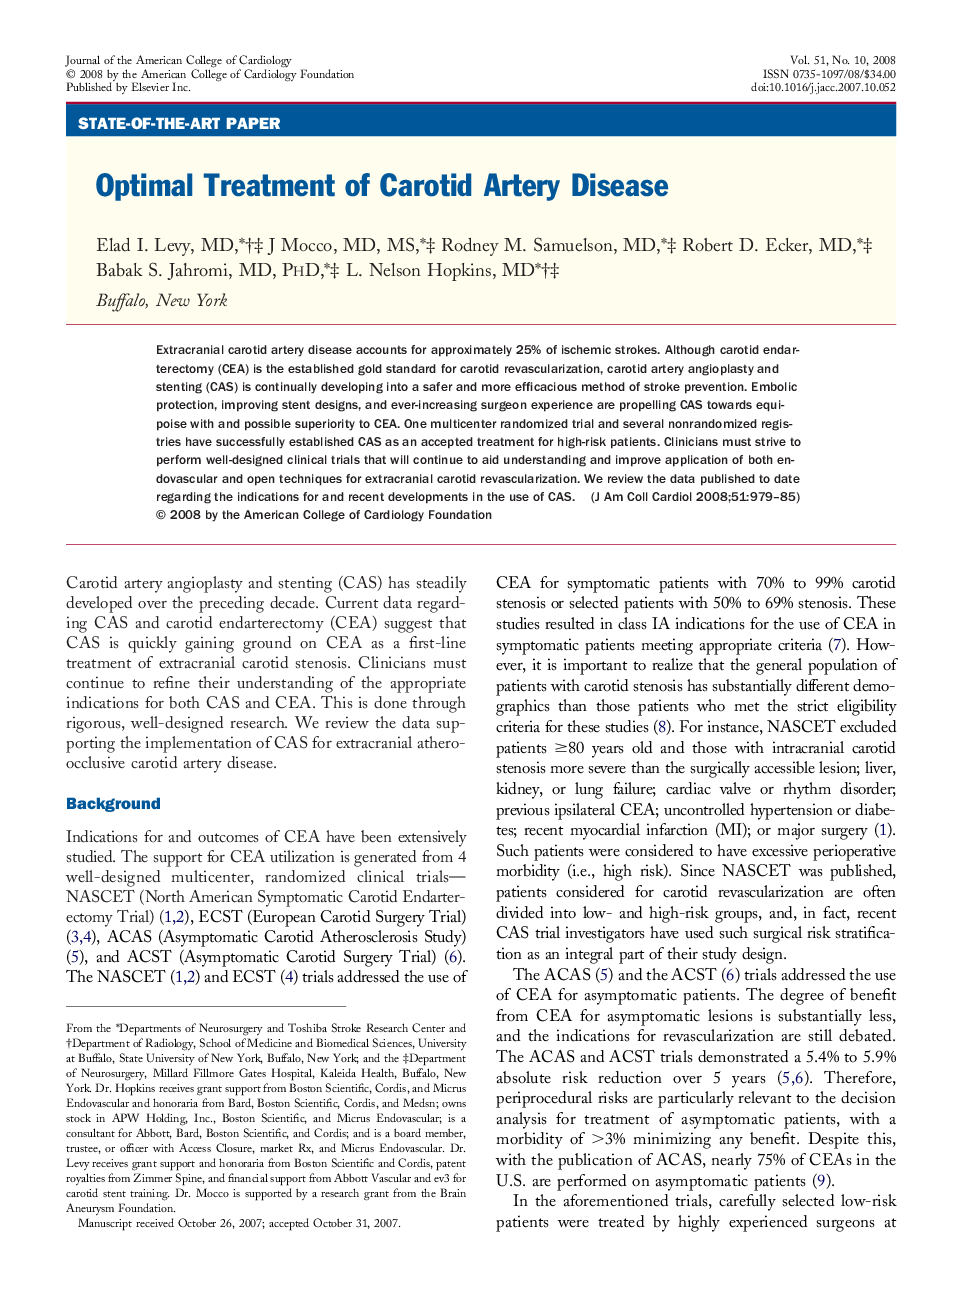 Optimal Treatment of Carotid Artery Disease 